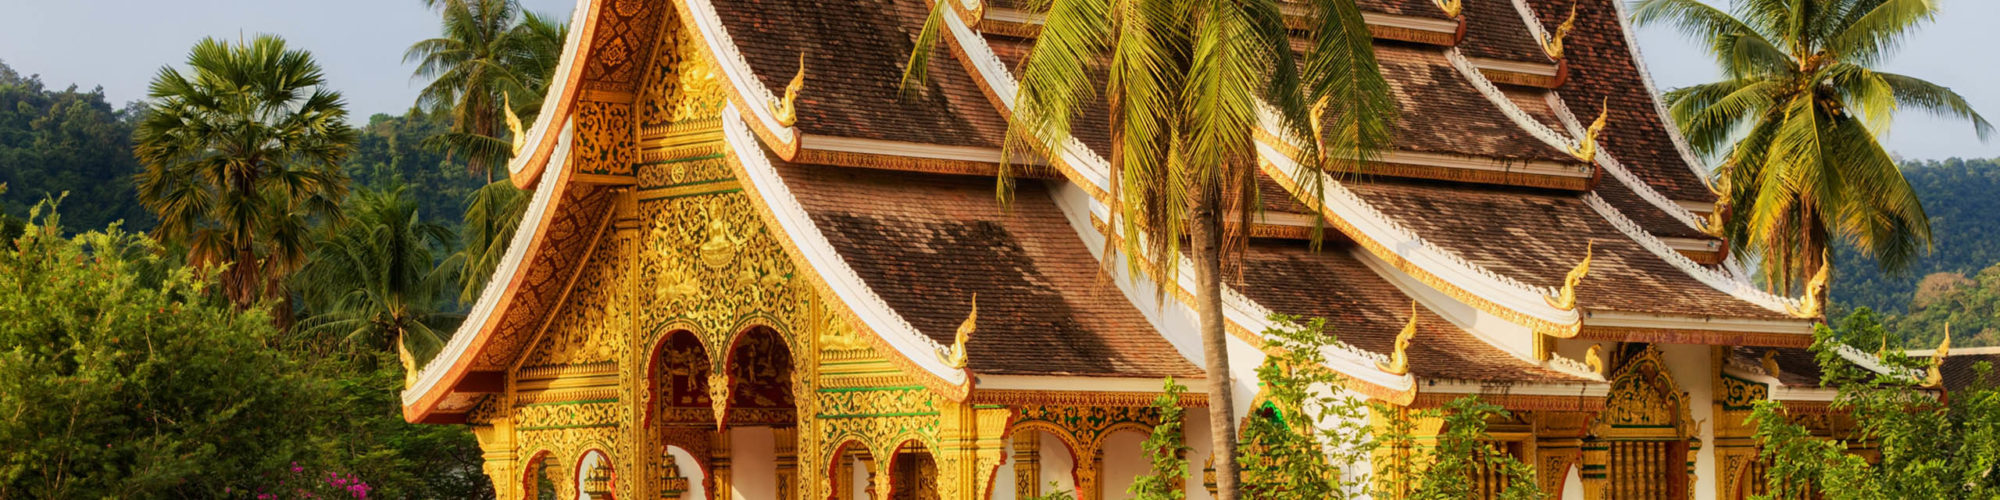 Laos Travel travel agents packages deals